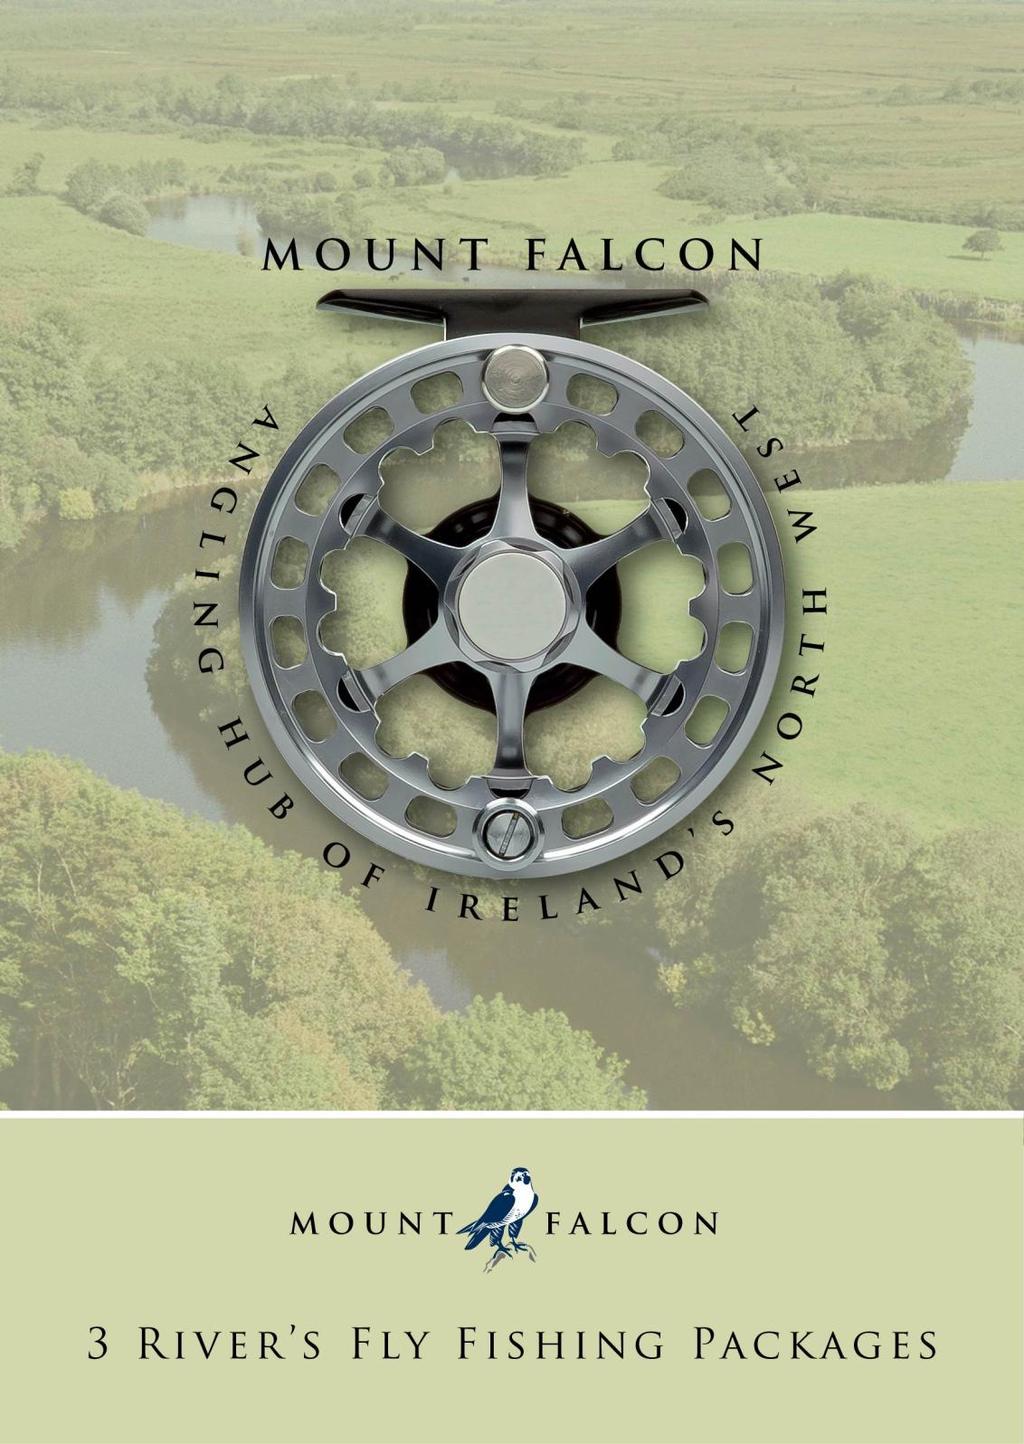 Mount Falcon, Foxford Road, Ballina, County Mayo Republic of Ireland www.